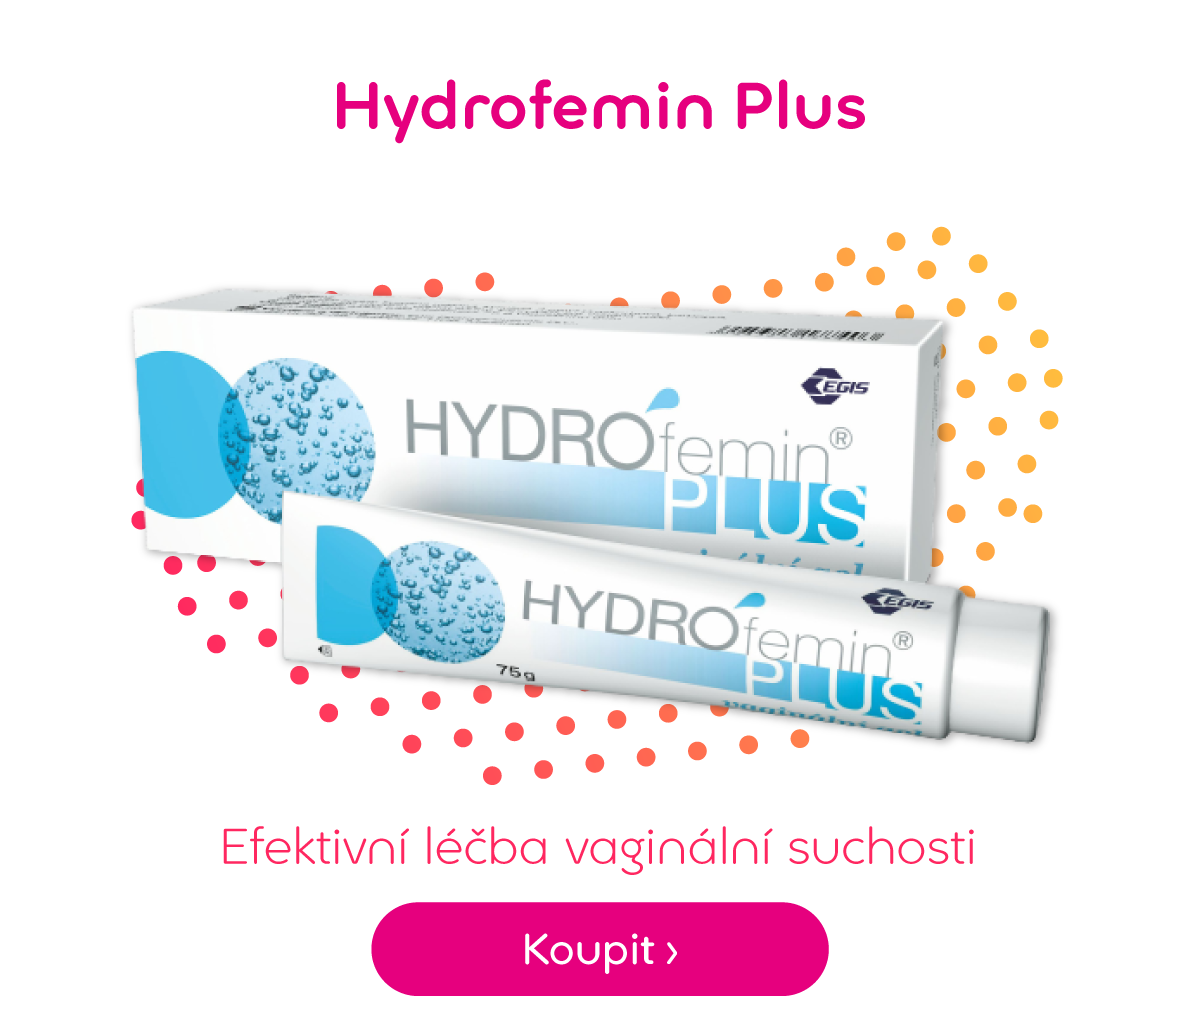 Hydrofemin Plus